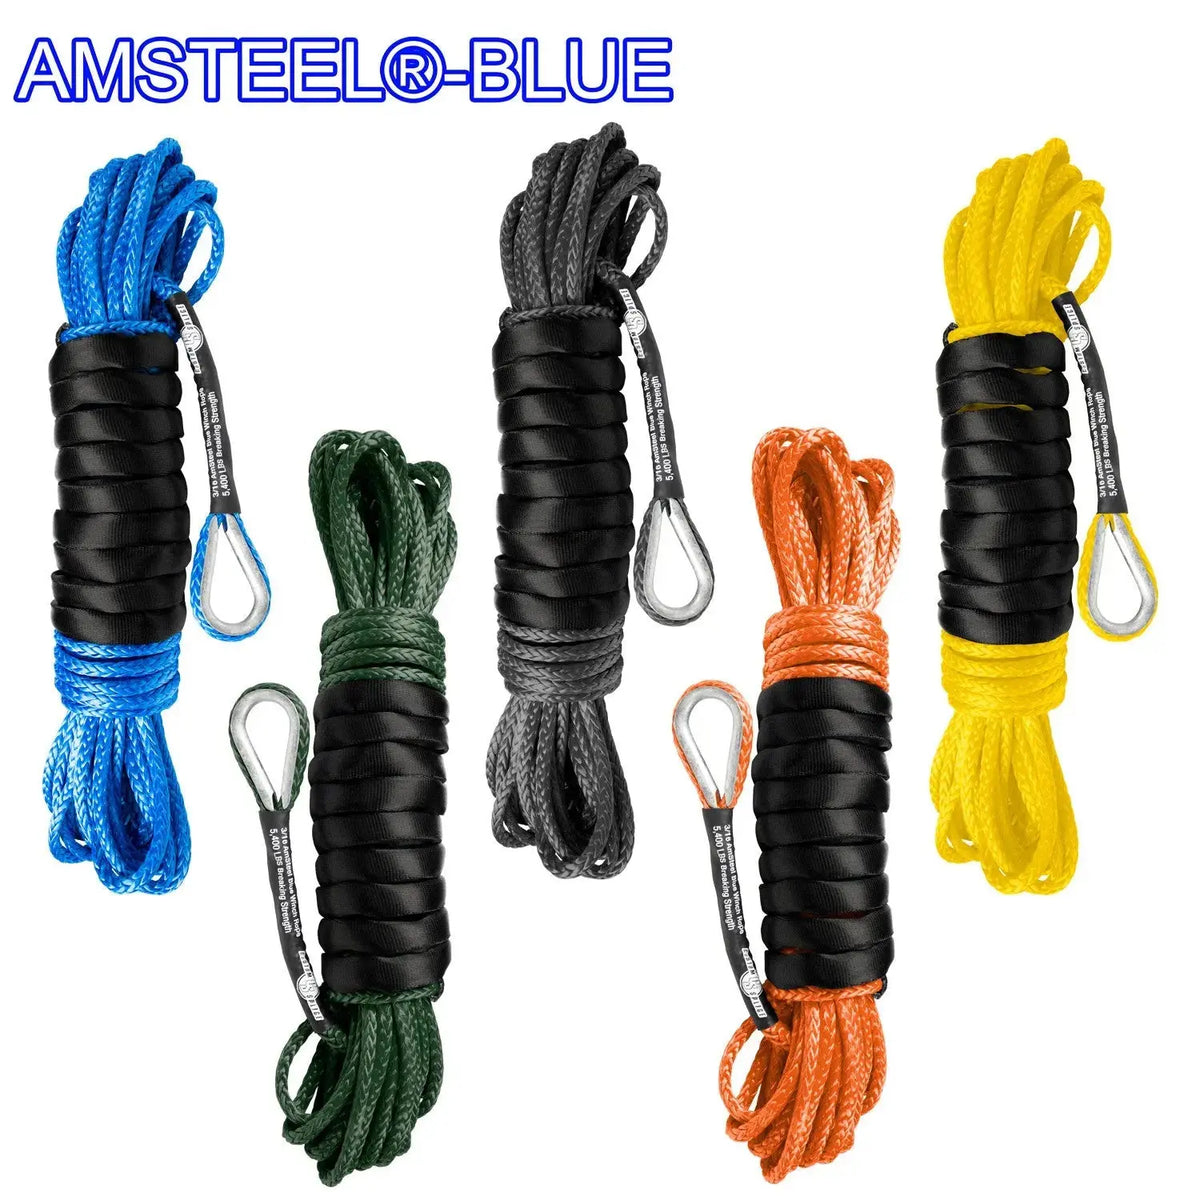 3/16 X 50' Main Line Winch Rope - AmSteel Blue